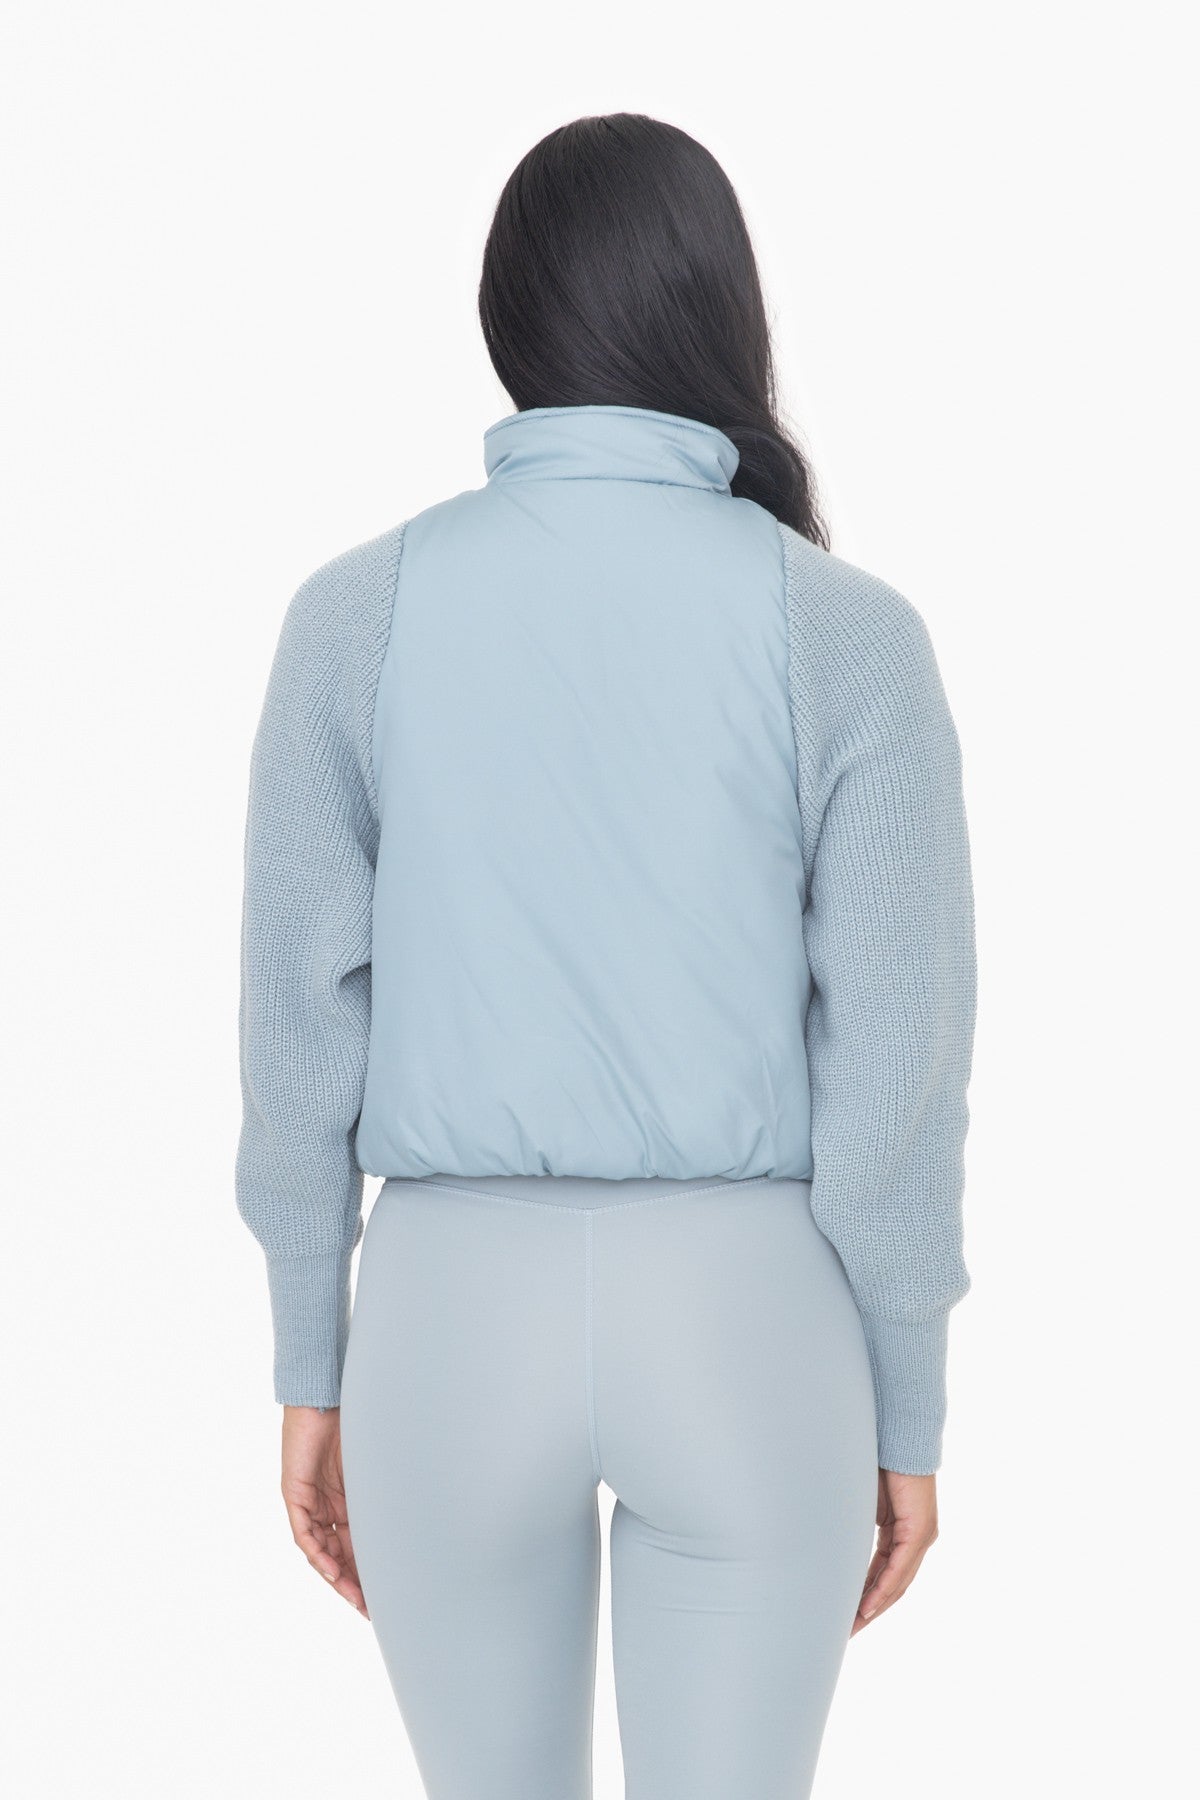 Padded Hybrid Zip Sweater in Smokey Blue